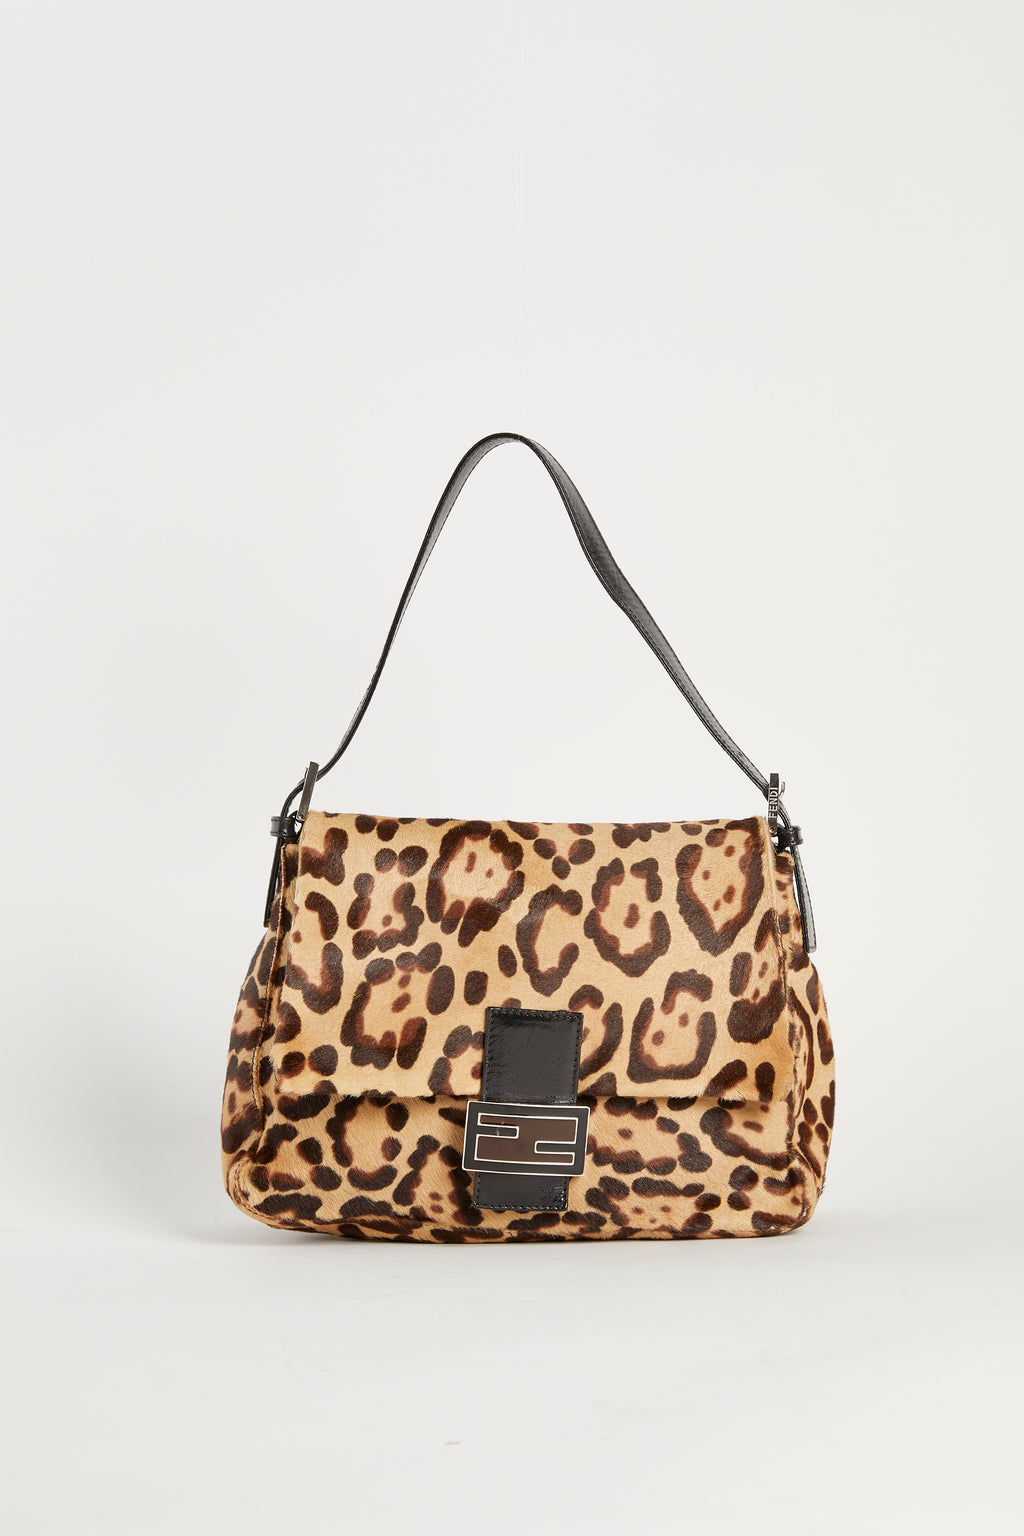 Vintage Fendi Leopard Print Pony Hair Mamma Shoulder Bag